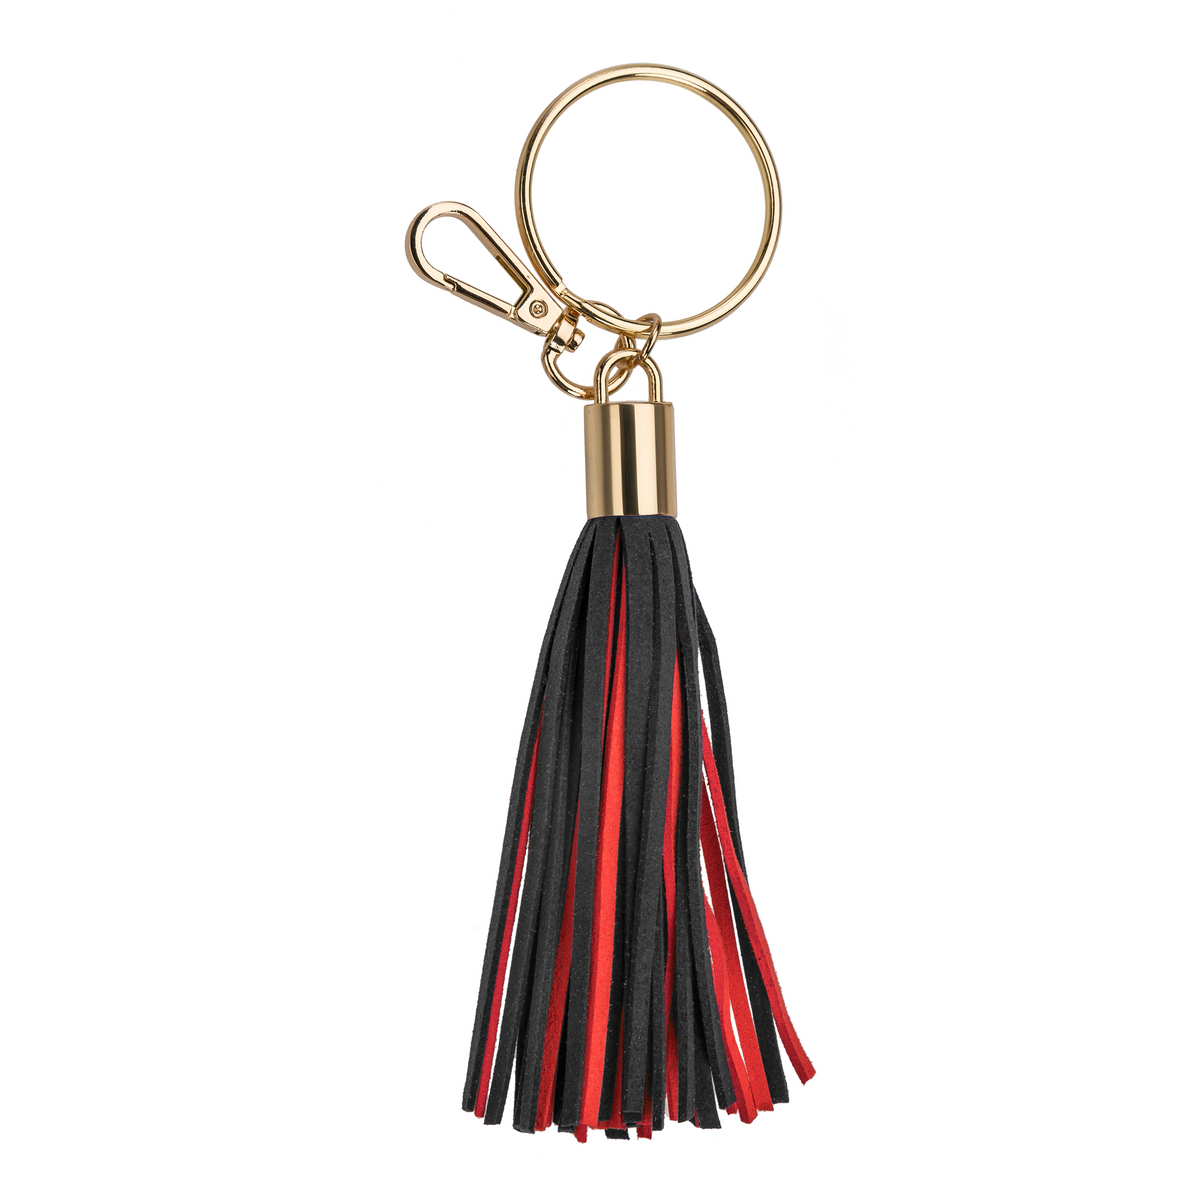 Suede Tassel Key Charm (Red/Black)